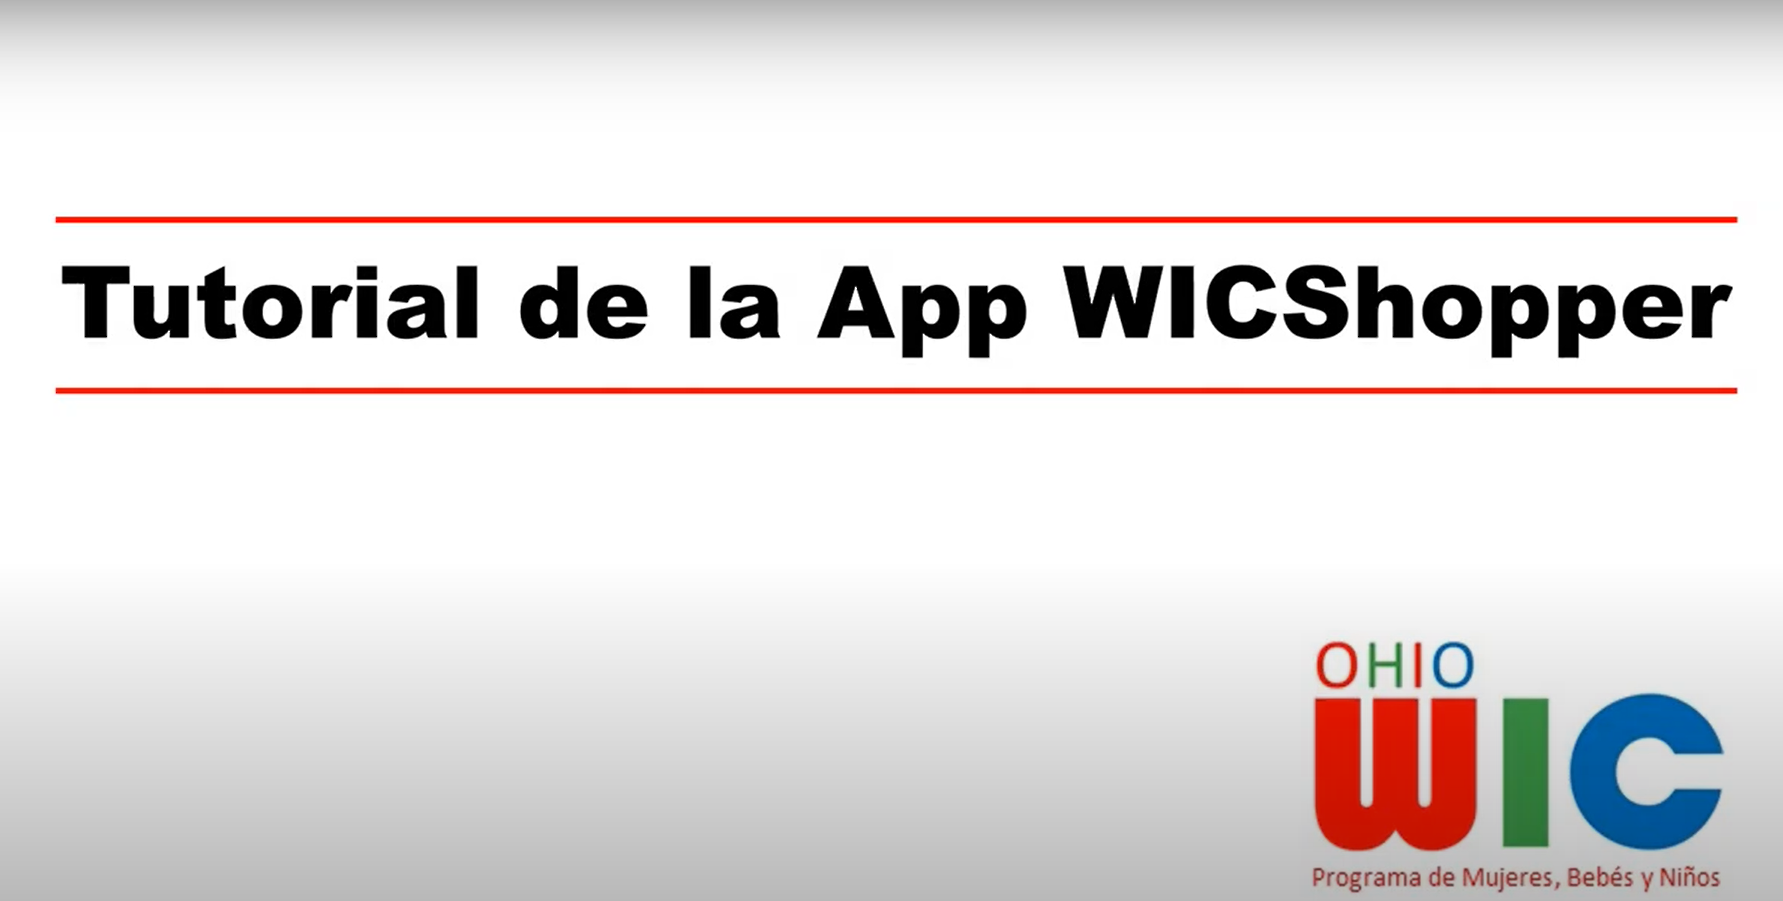 pagina que dice "Tutorial de la App WICShopper"